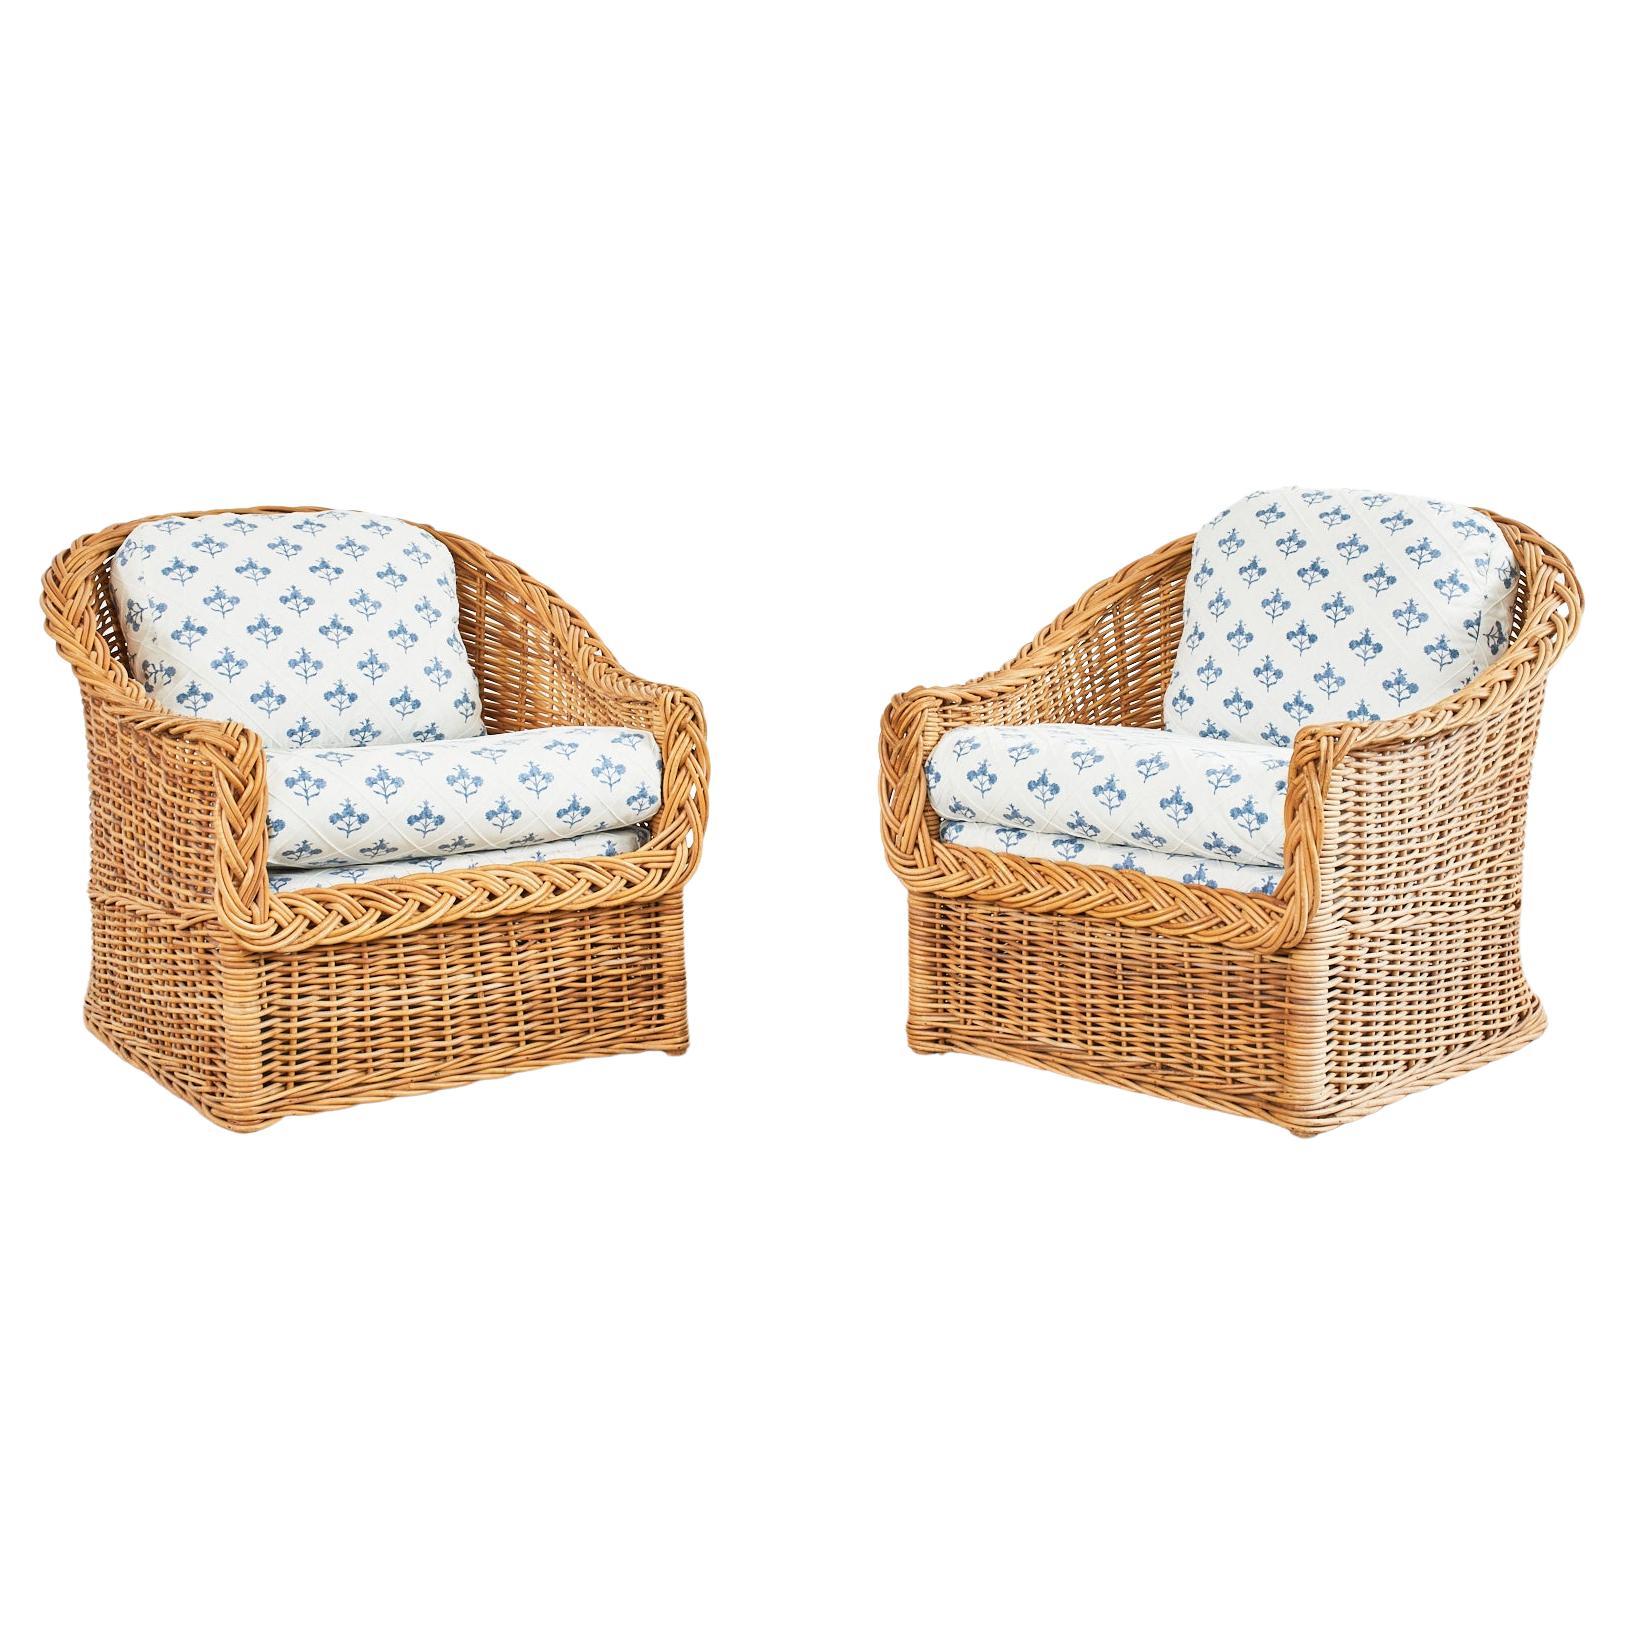 Pair of Organic Modern Woven Rattan Wicker Lounge Chairs